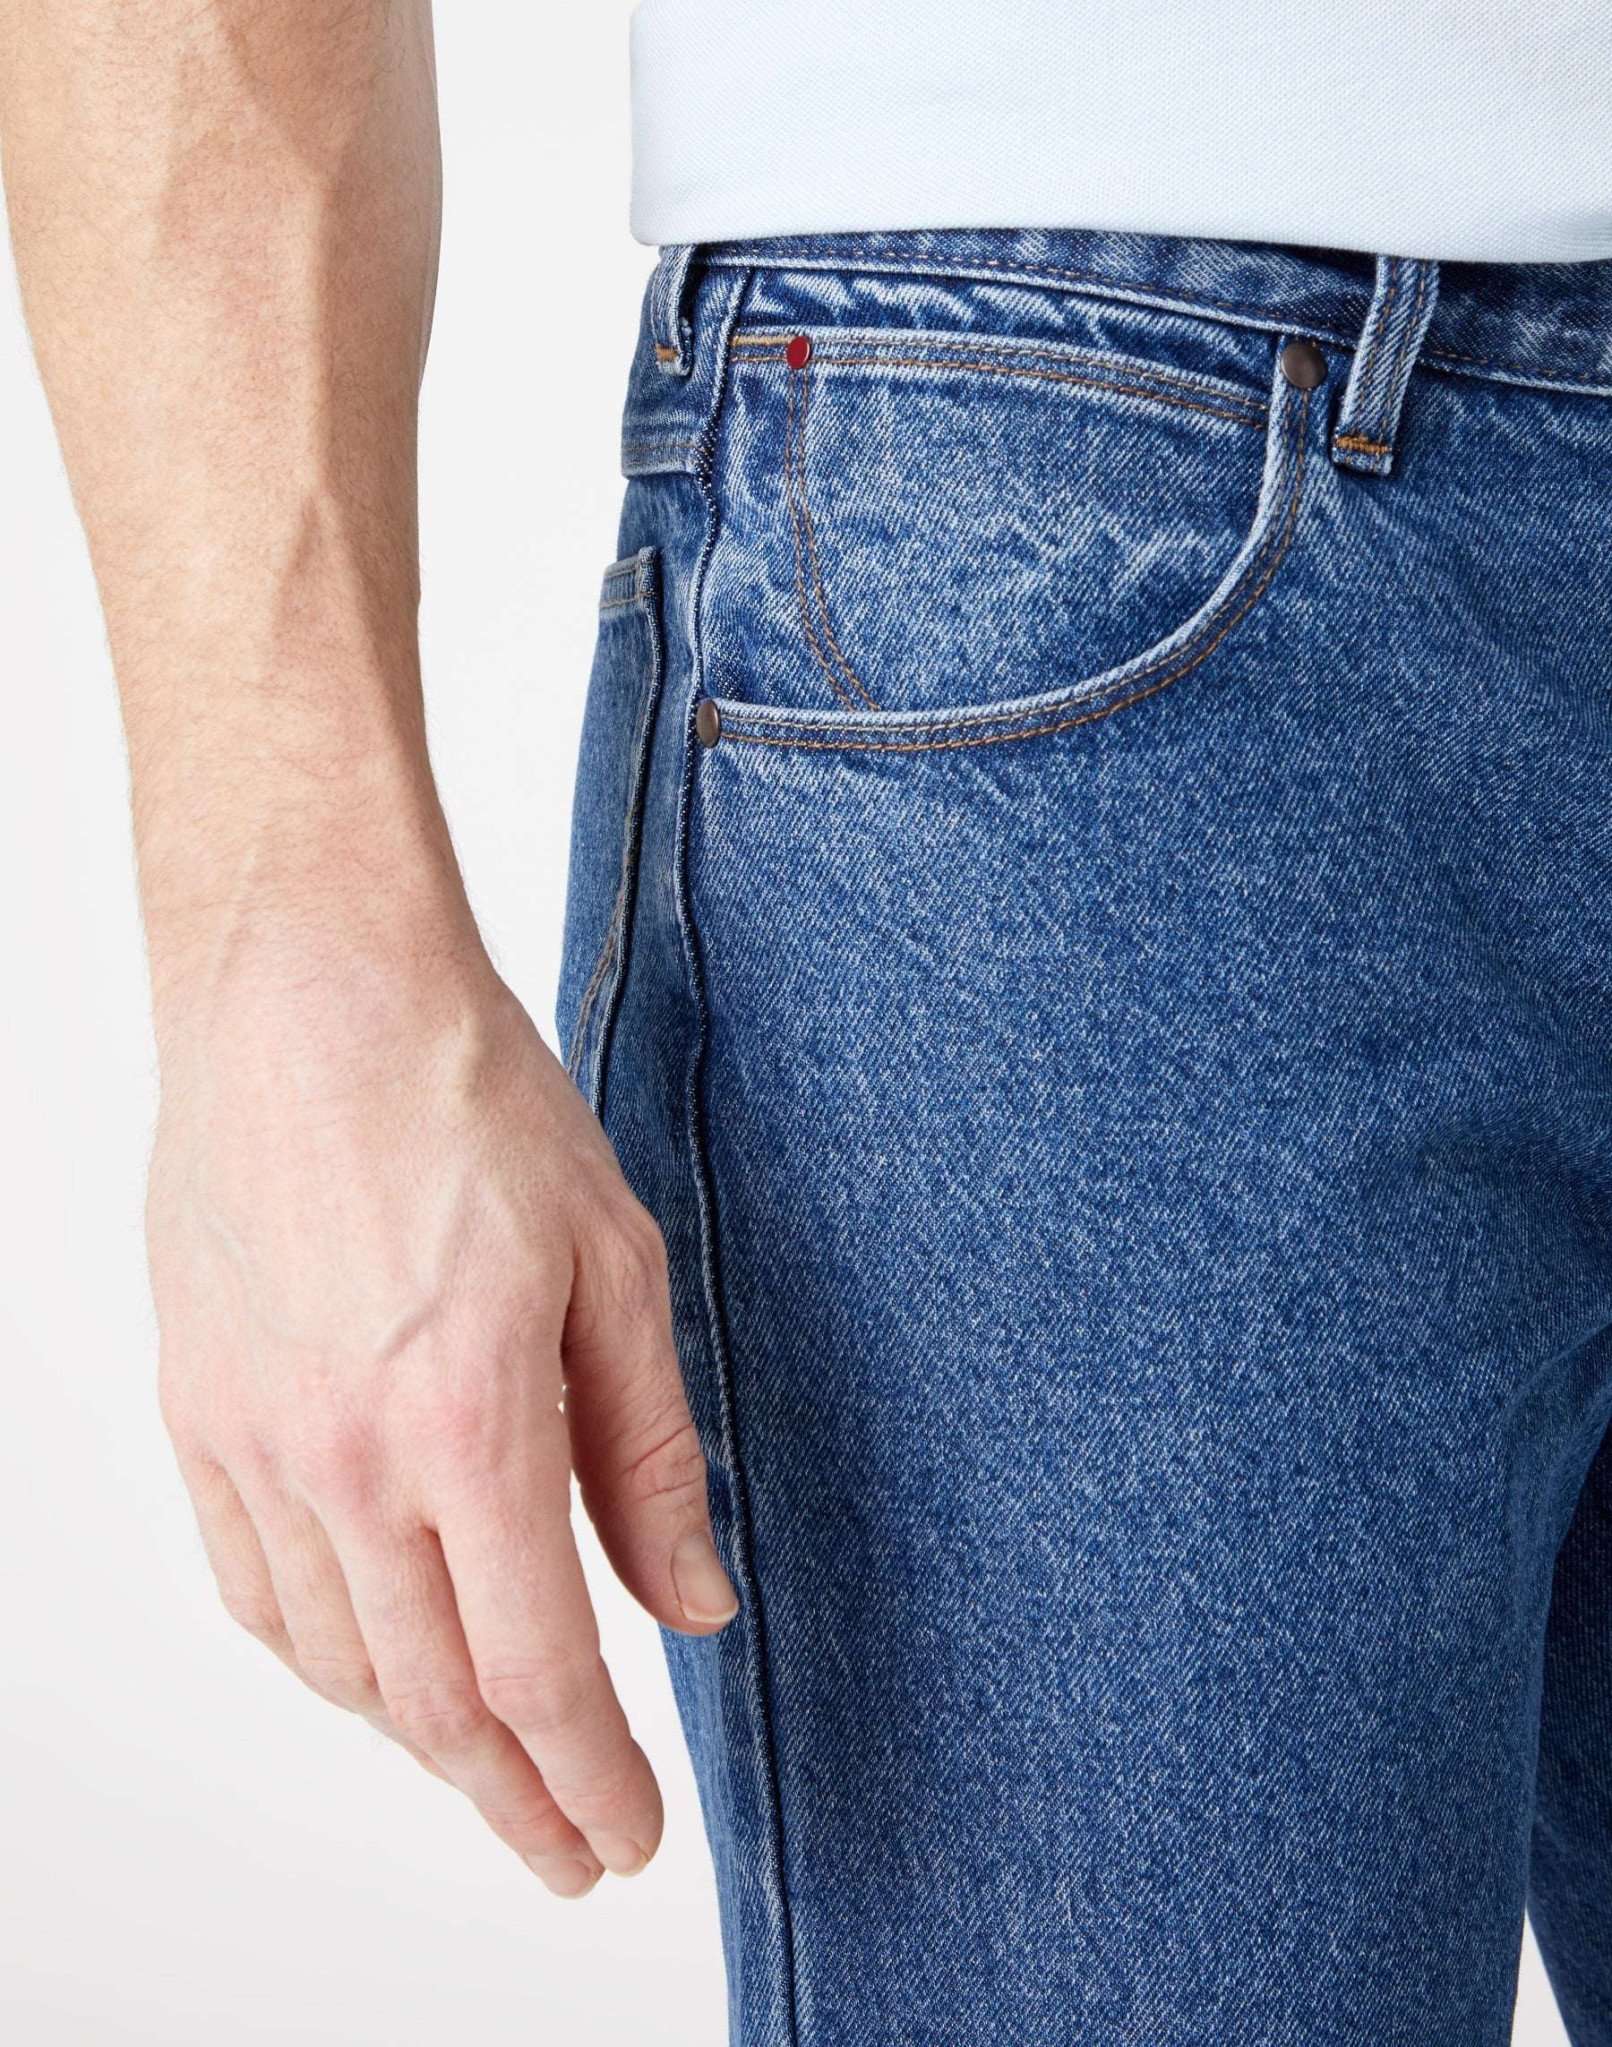 Straight Non Stretch in Medium Stonewash Jeans Wrangler   